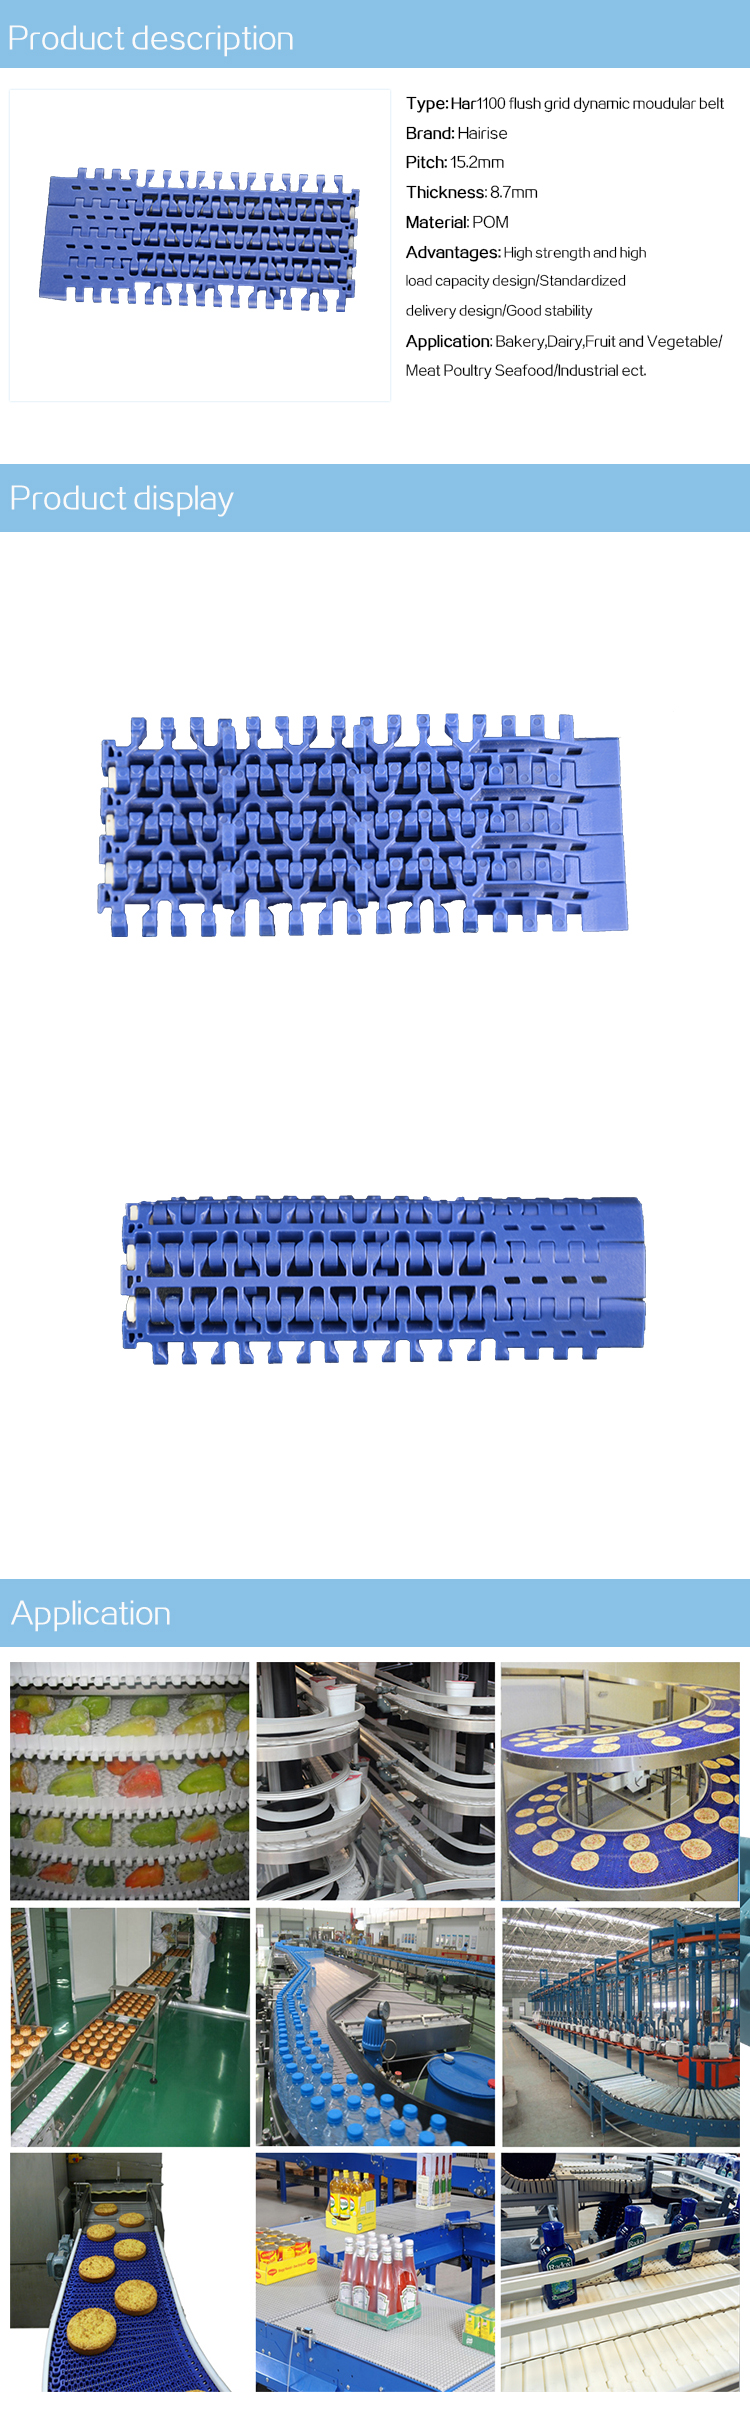 1100 flush grid dynamic modular belt.jpg